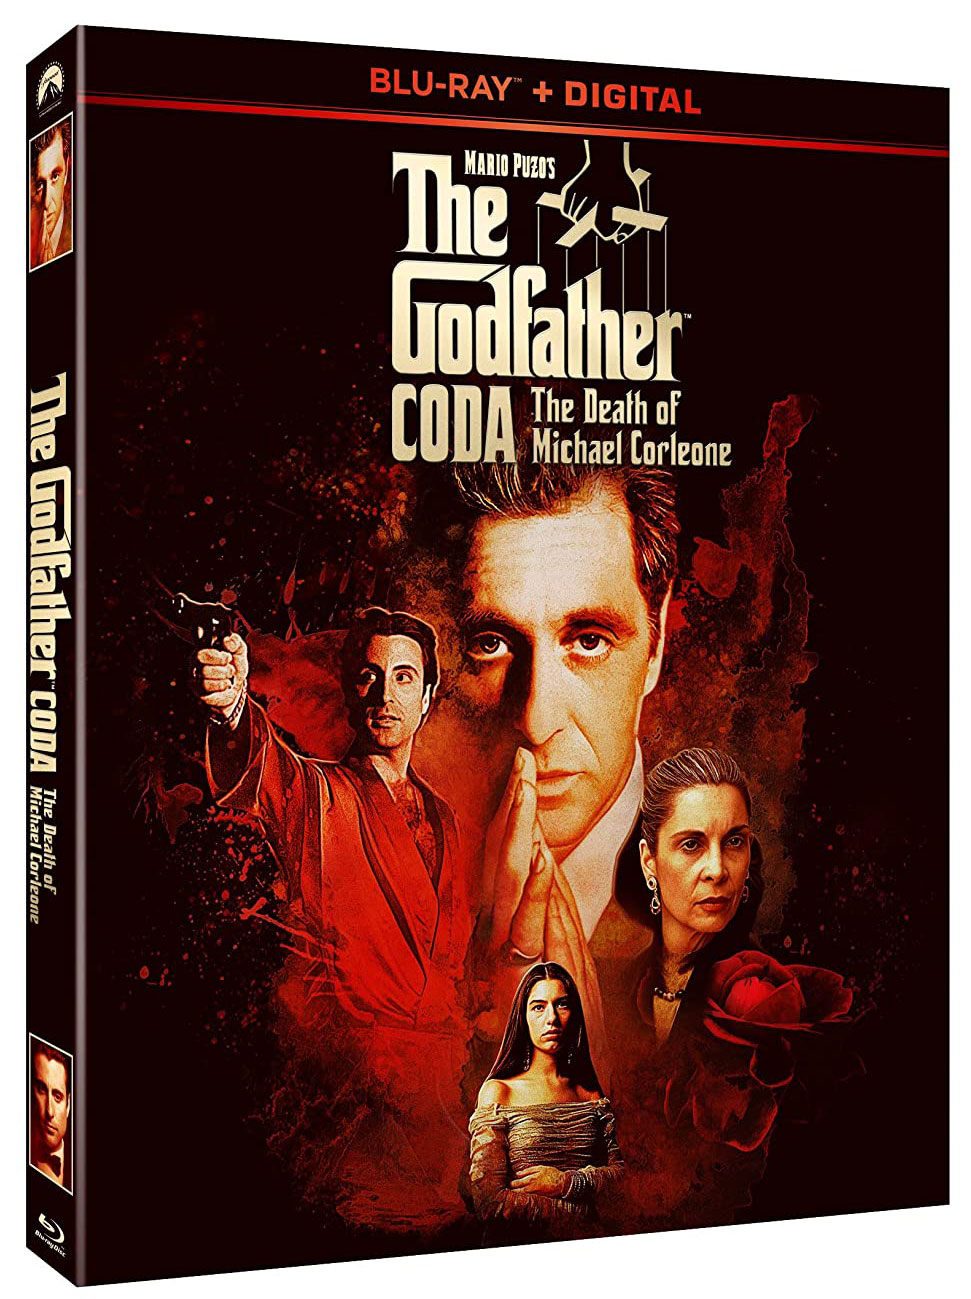 Mario-Puzos-The-Godfather-Coda-The-Death-of-Michael-Corleone-Blu-ray